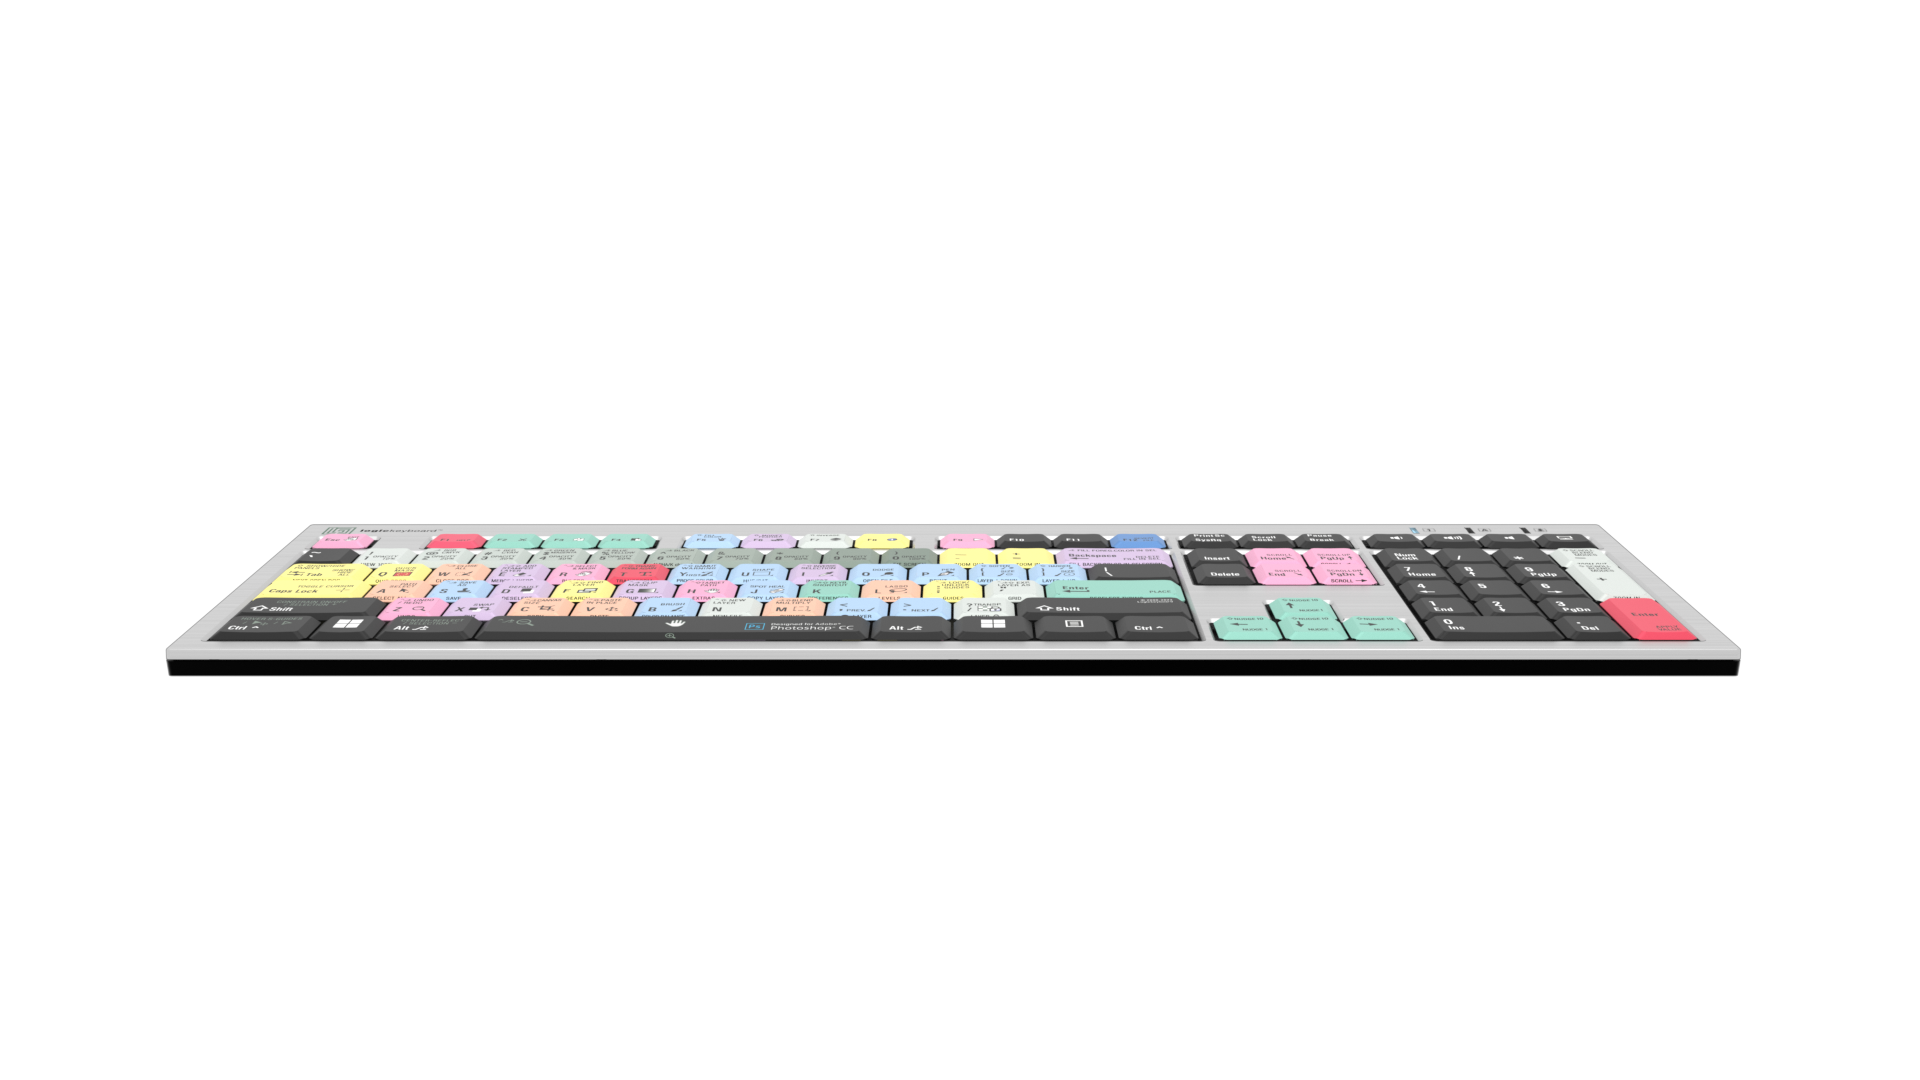 Adobe Photoshop CC PC Keyboard | Logickeyboard